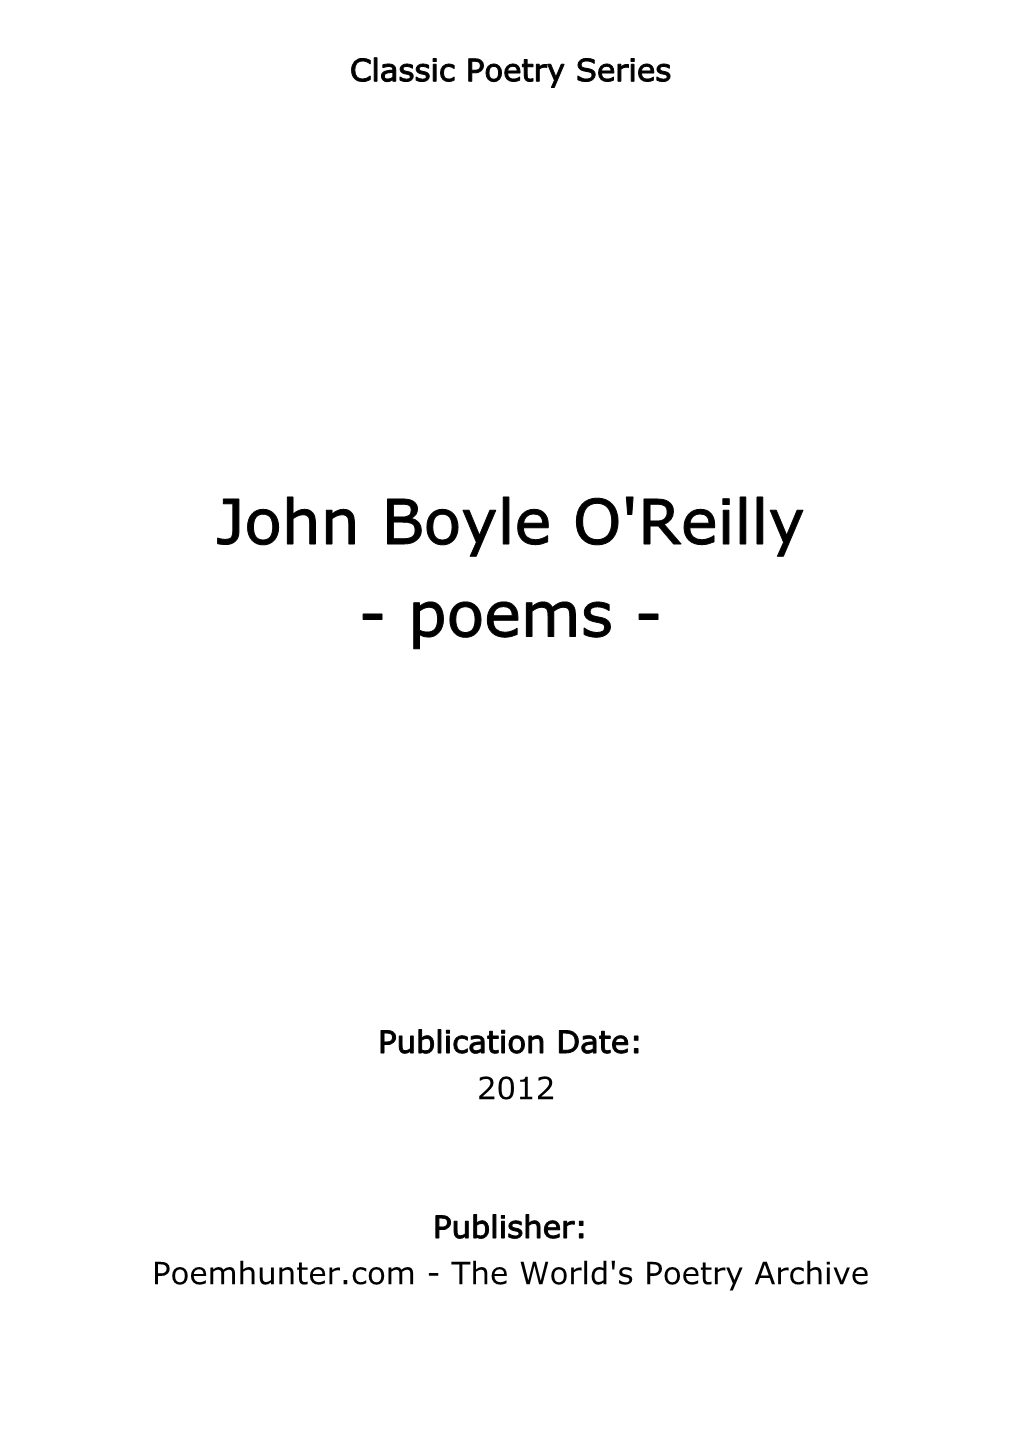 John Boyle O'reilly - Poems